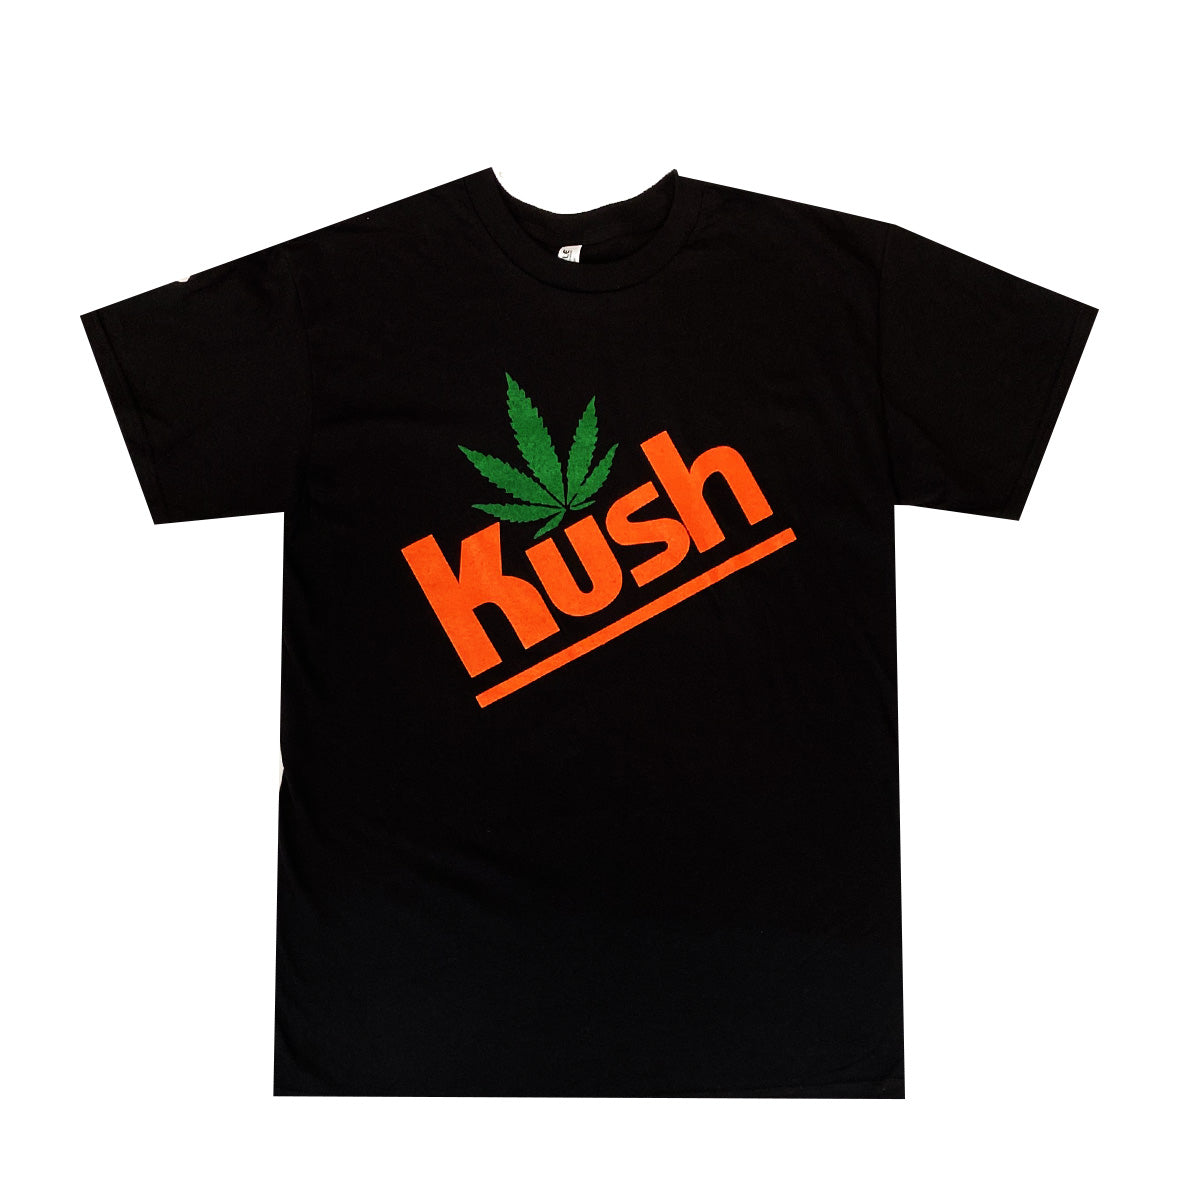 Kush 100% Cotton T-Shirt, Pack of 5 Units, M, L, XL, XXL, XXXL